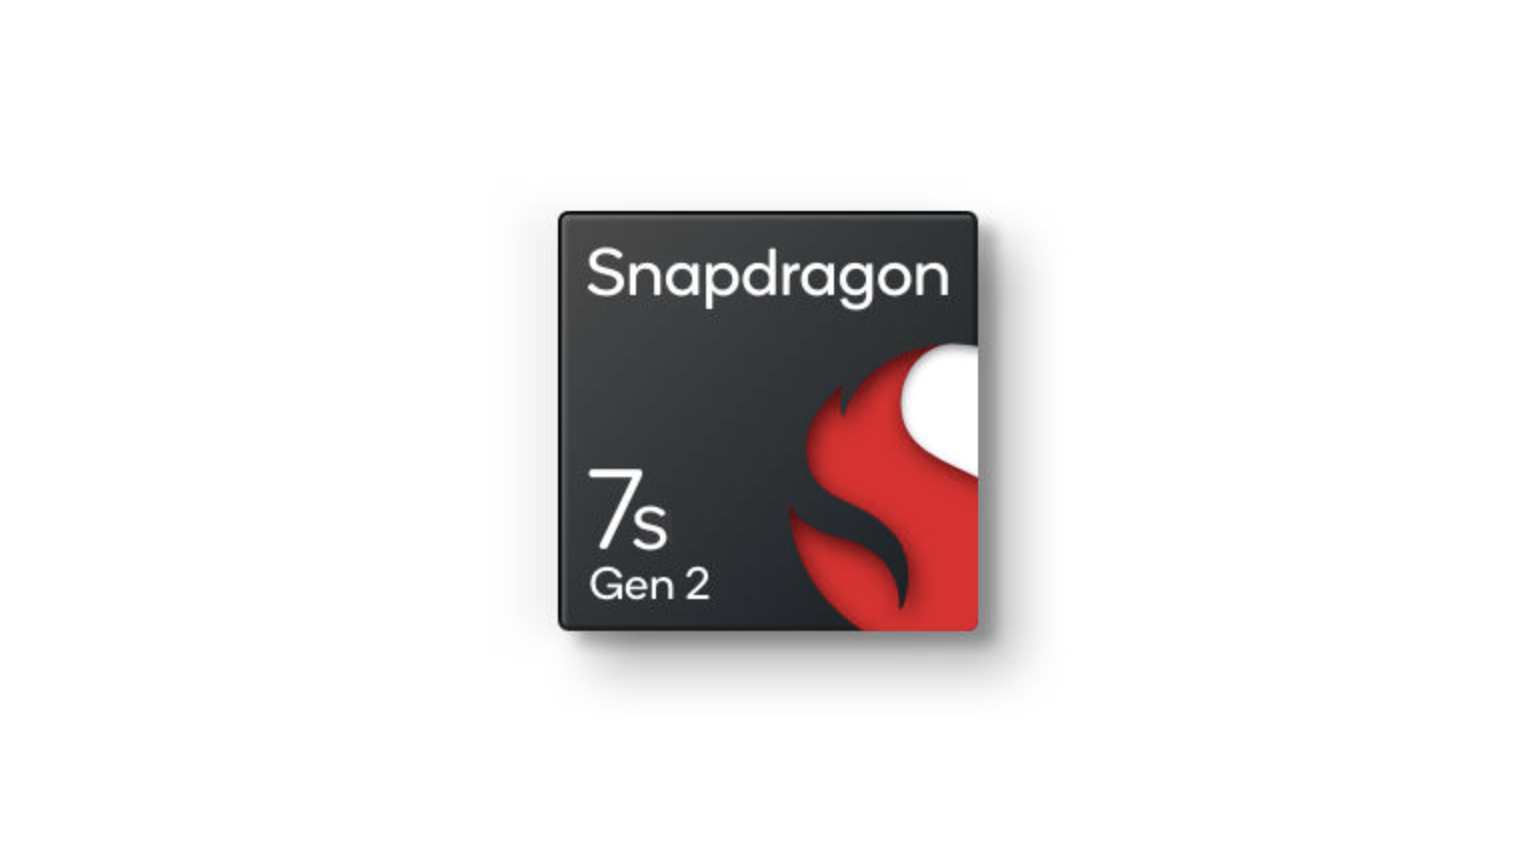 The Snapdragon 7s Gen 2 is Qualcomm's Newest Midrange Chip